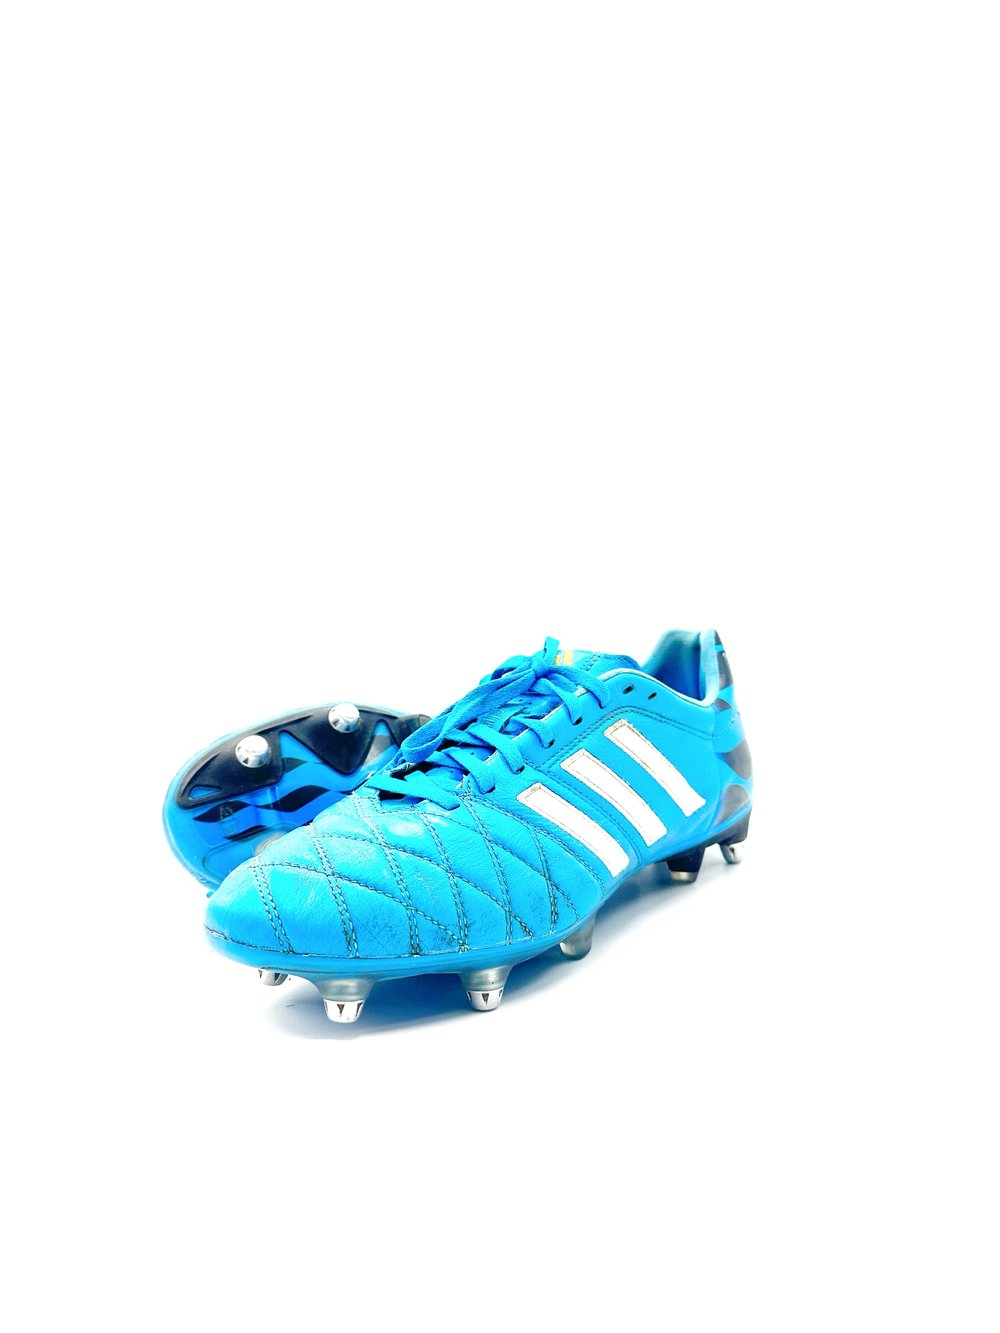 Image of Adidas 11pro Blue SG WORN